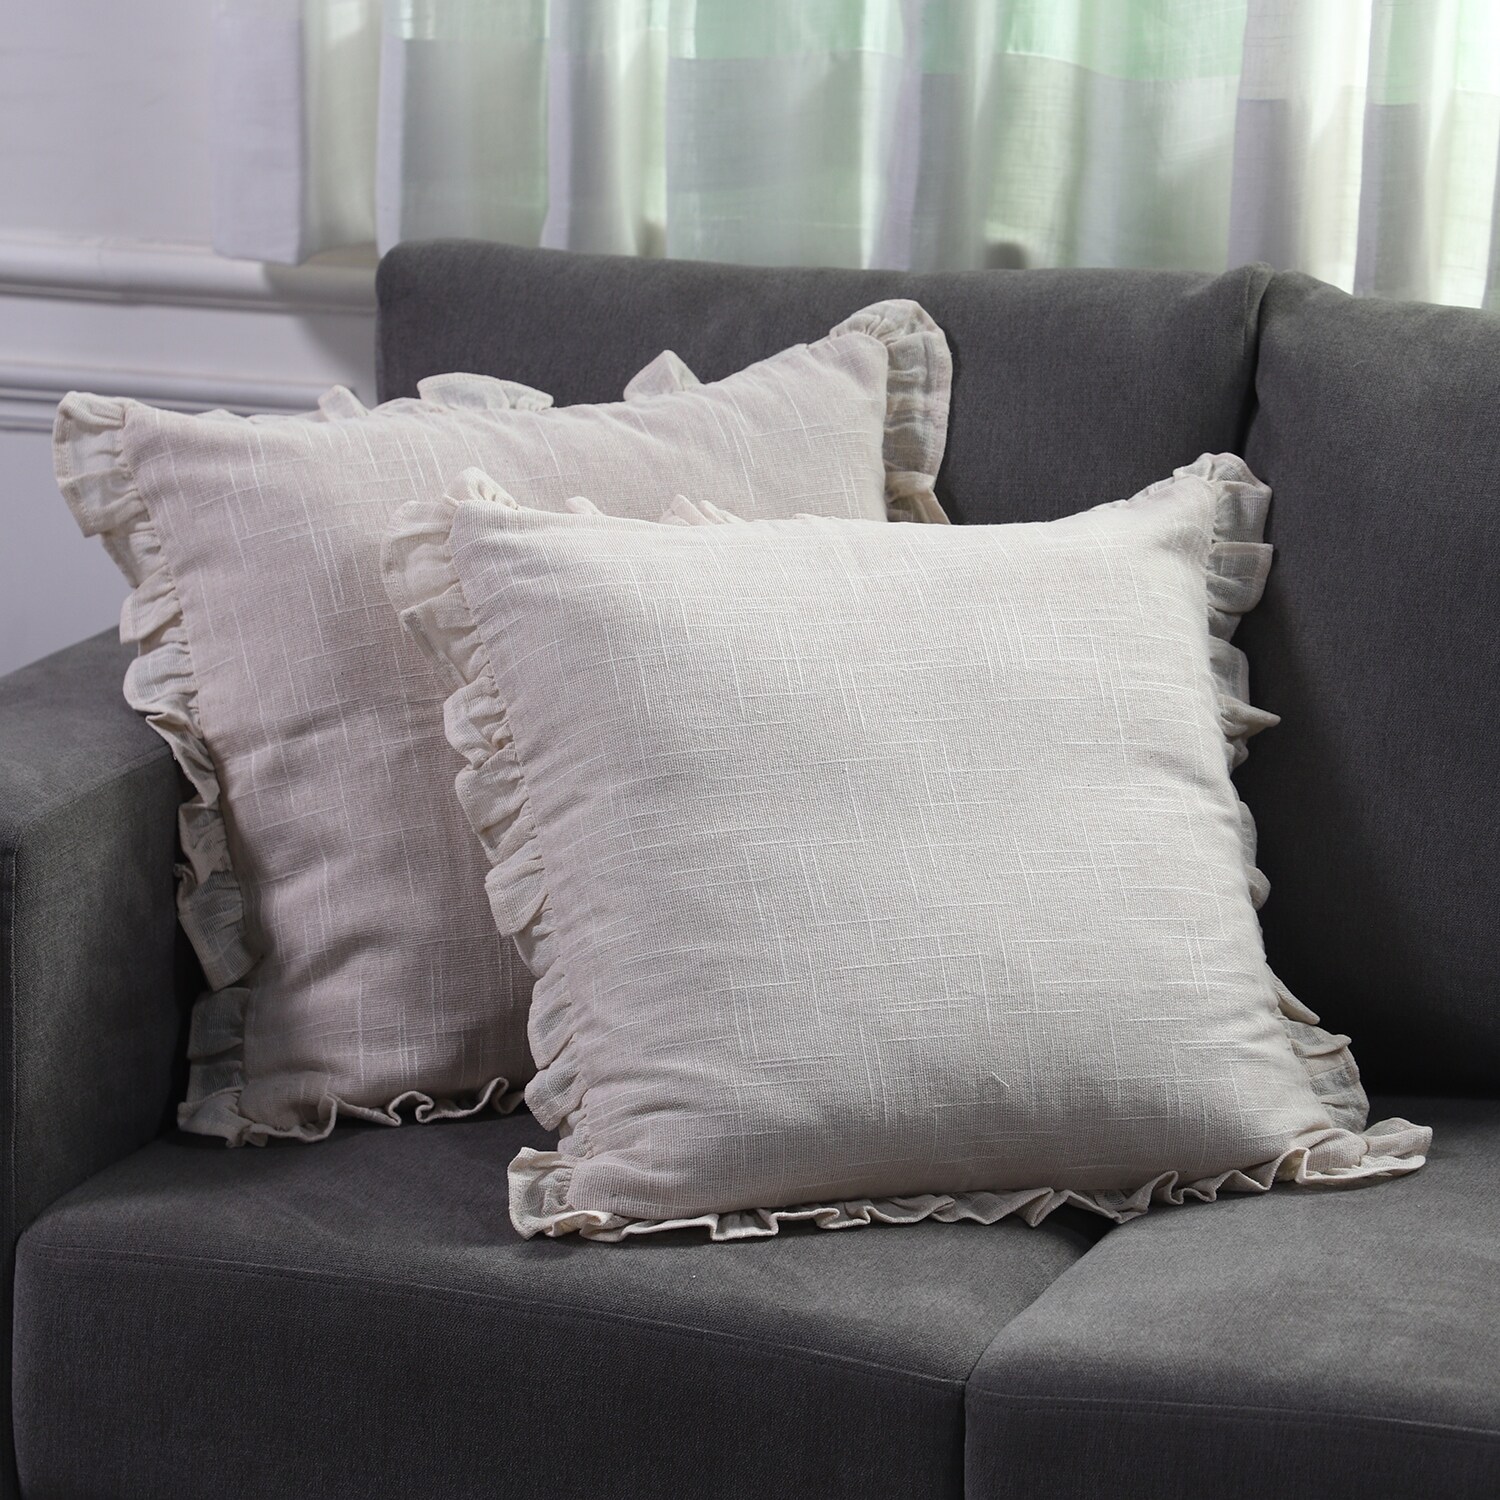 Home Bed Decor Cotton Linen Square Decorative Throw Pillow Case Cushion Cover 